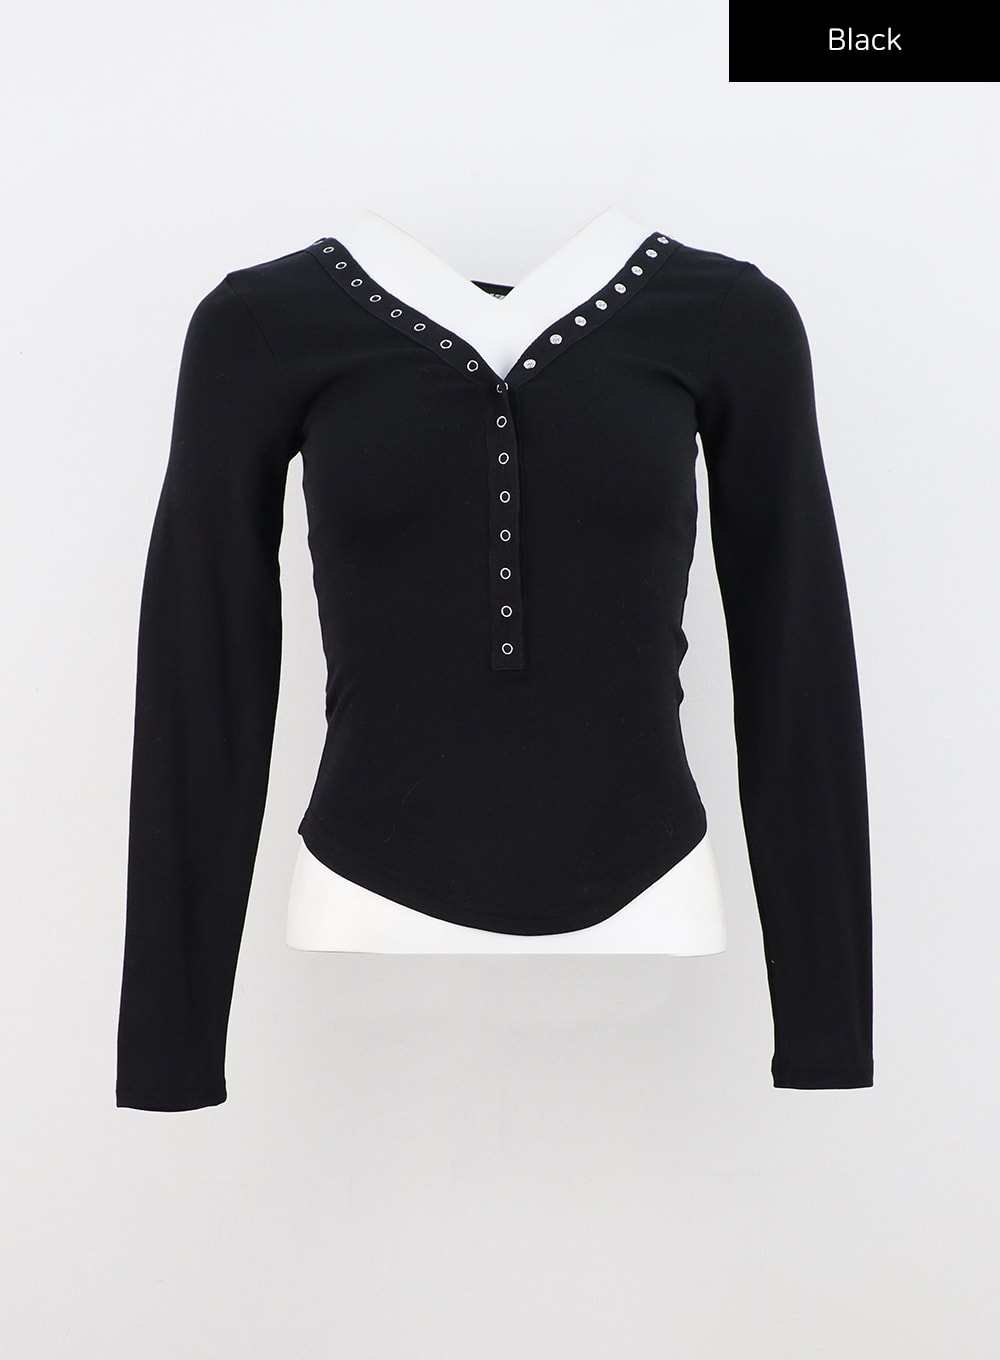 fleece-lined-buttoned-top-cn303 / Black